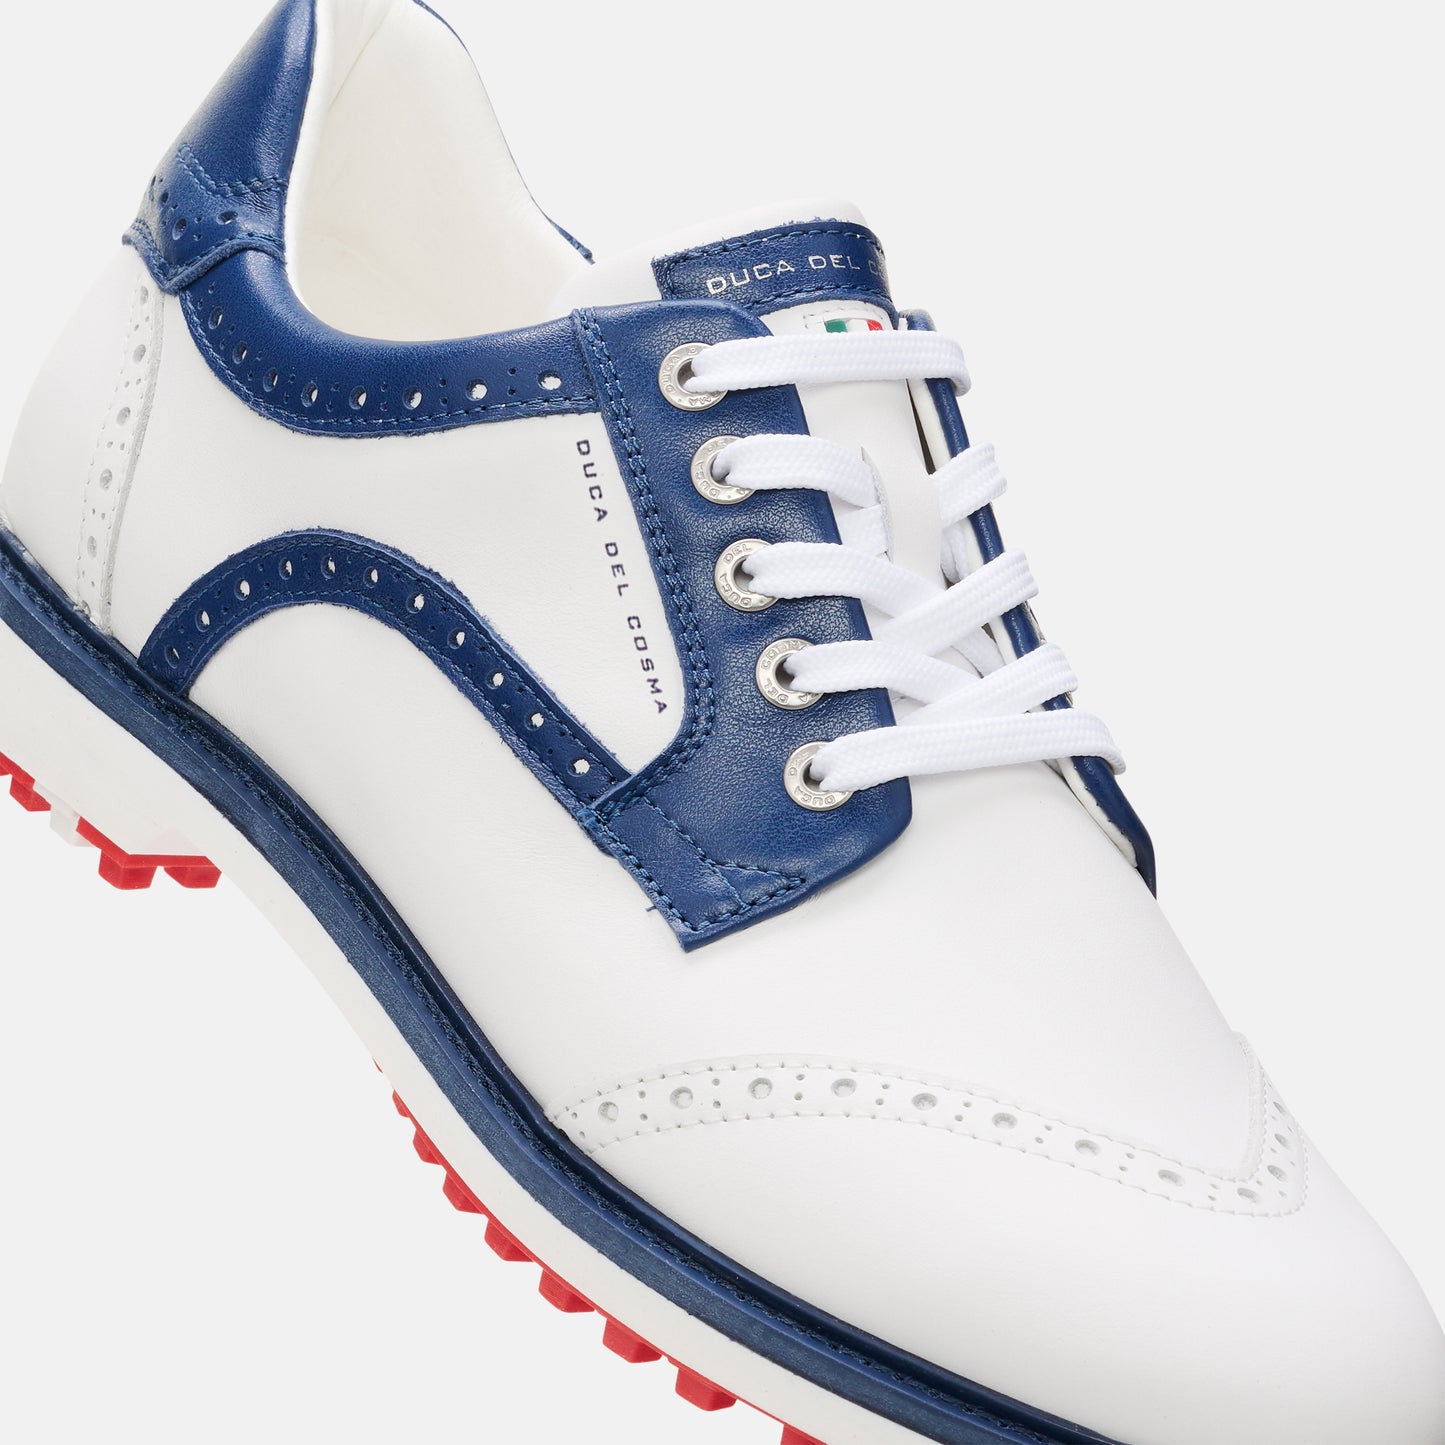 Waterproof Golf Shoe, White Golf Shoes, Lightweight Golf Shoes, Spikeless Golf Shoes, Duca del Cosma Men's Golf Shoes, Classic golf shoes.